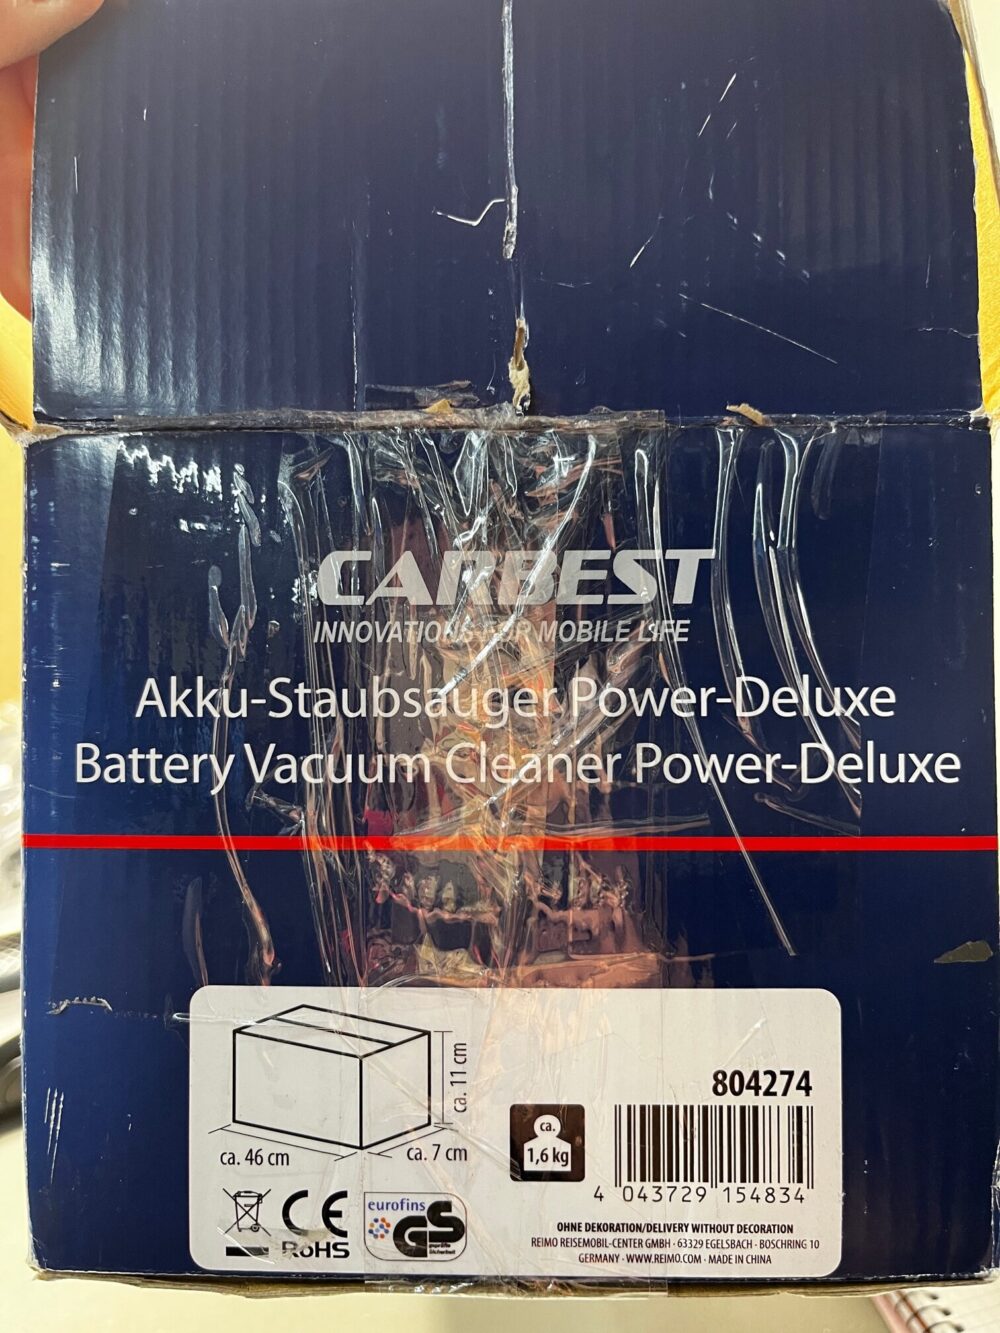 Carbest Akku Staubsauger Power Deluxe